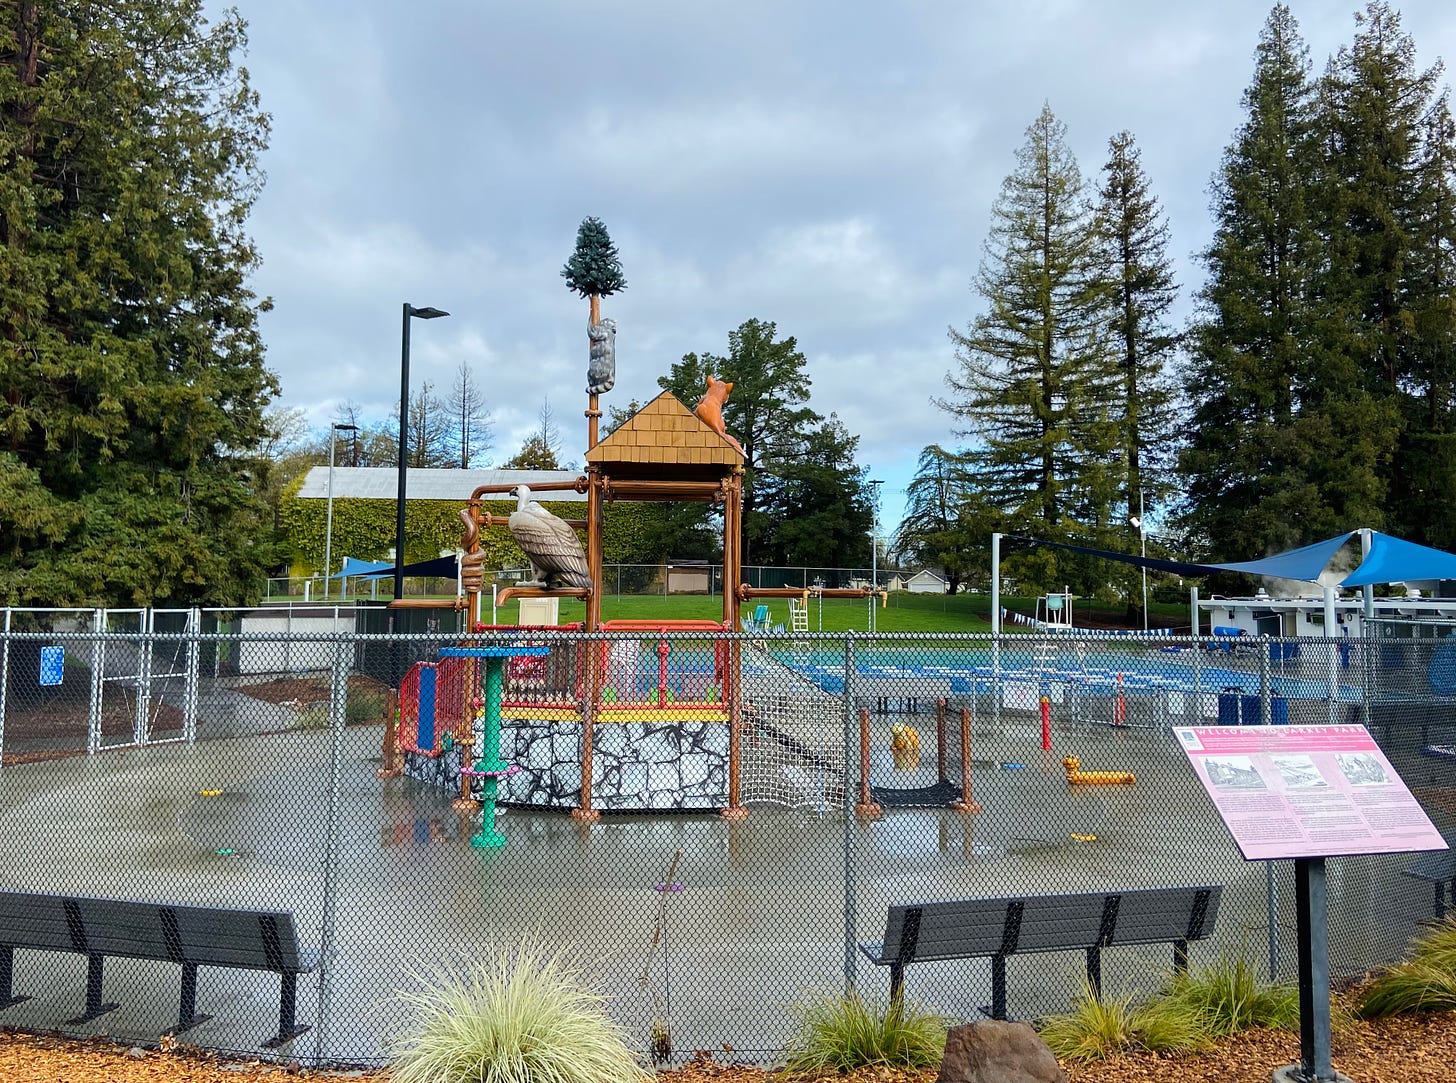 A park splash pad structure with animal figure decorations.